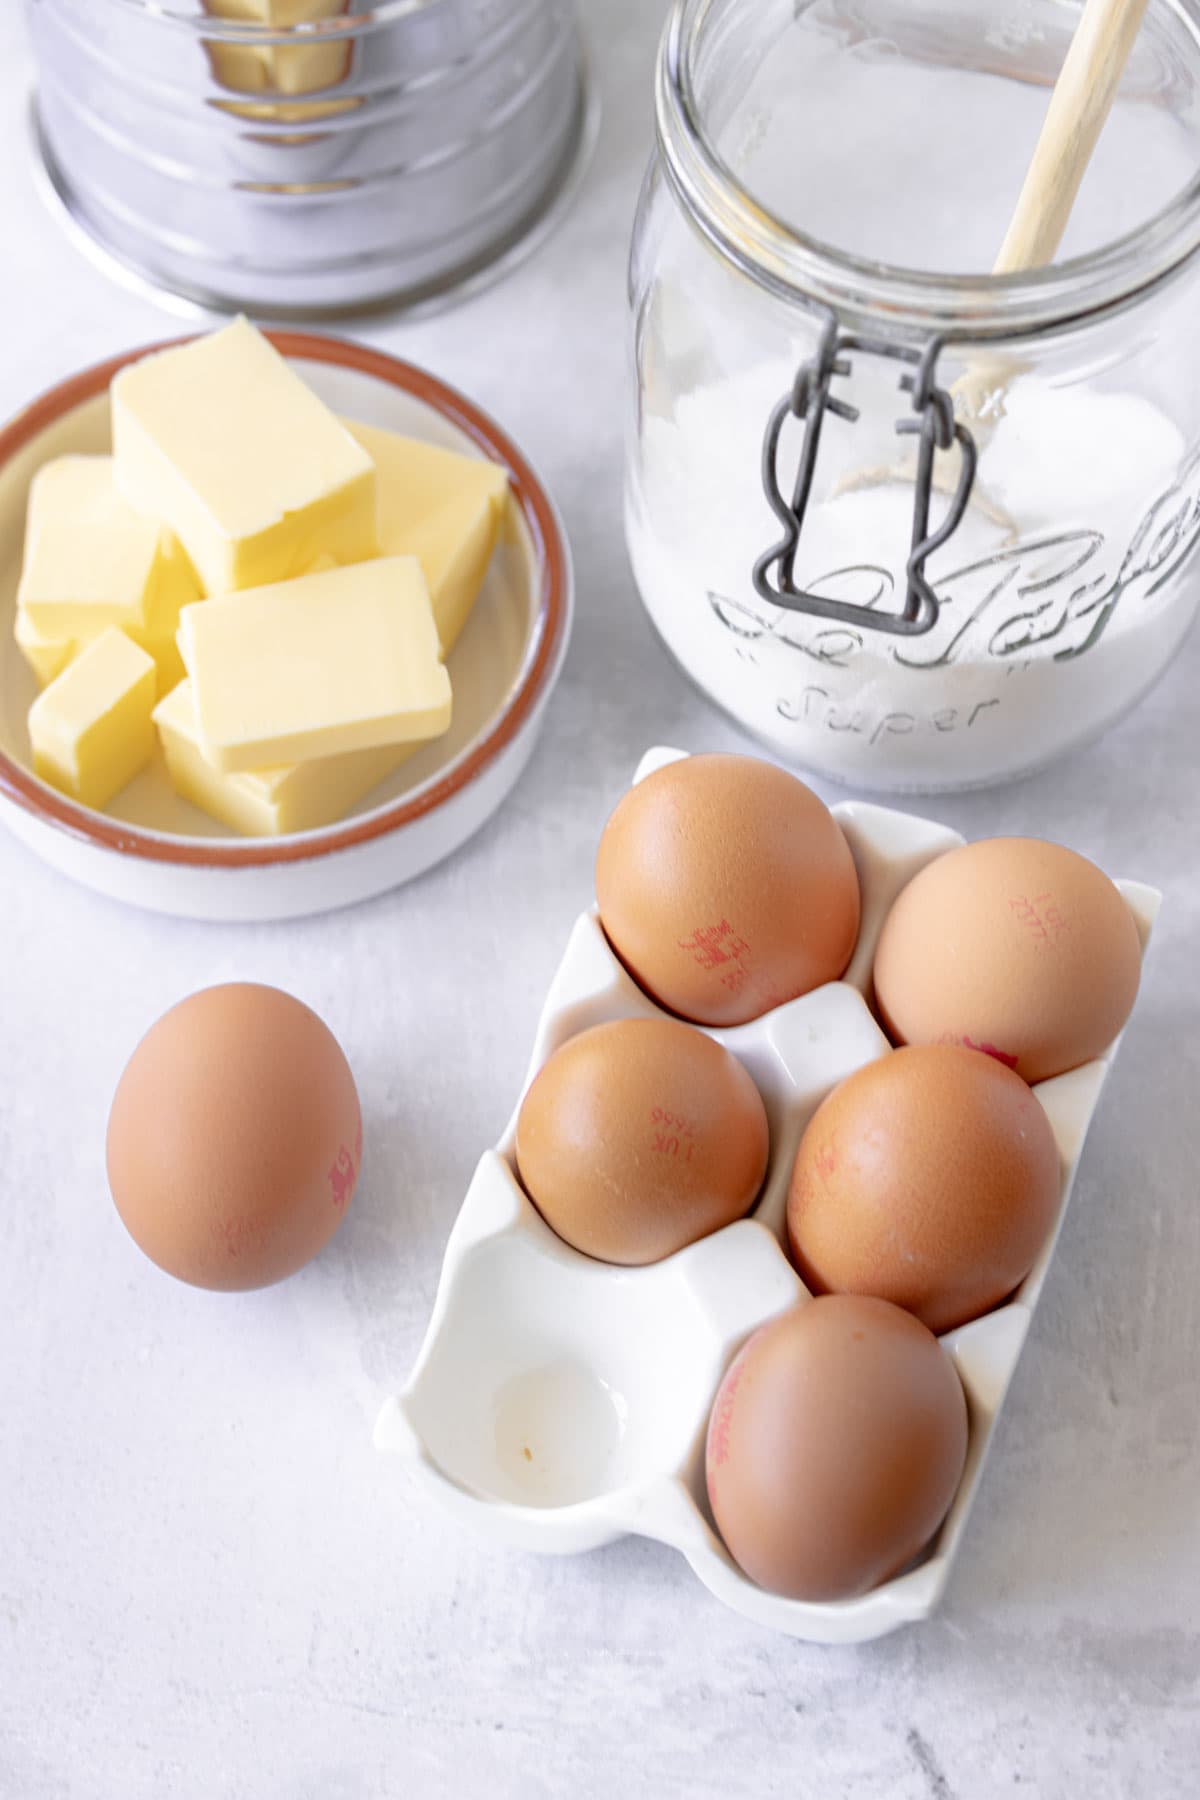 Eggs in a white ceramic egg tray